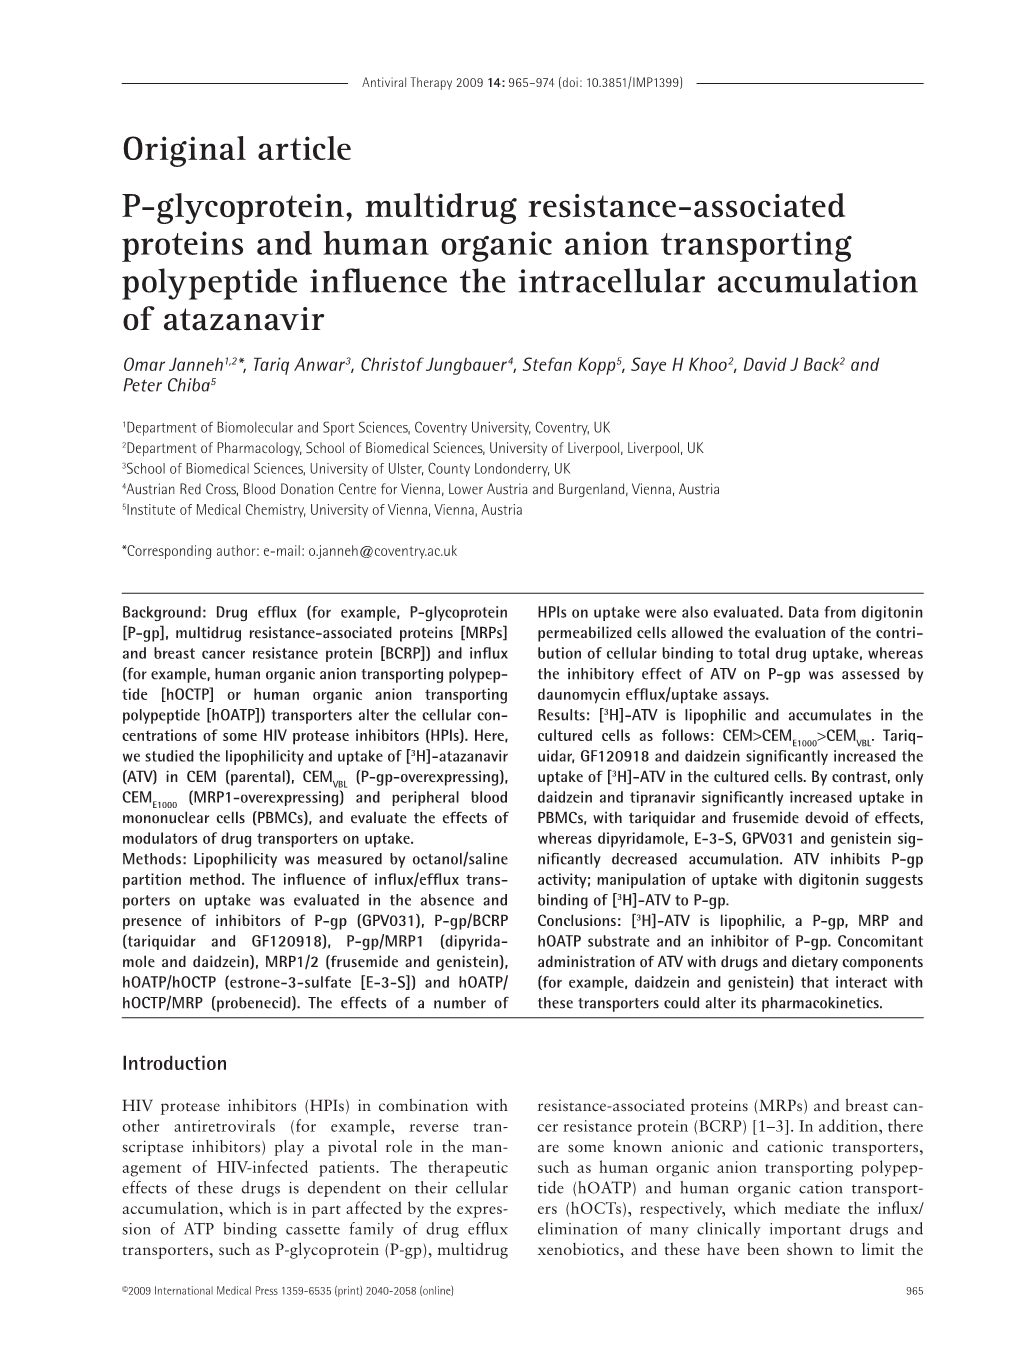 Original Article P-Glycoprotein, Multidrug Resistance-Associated